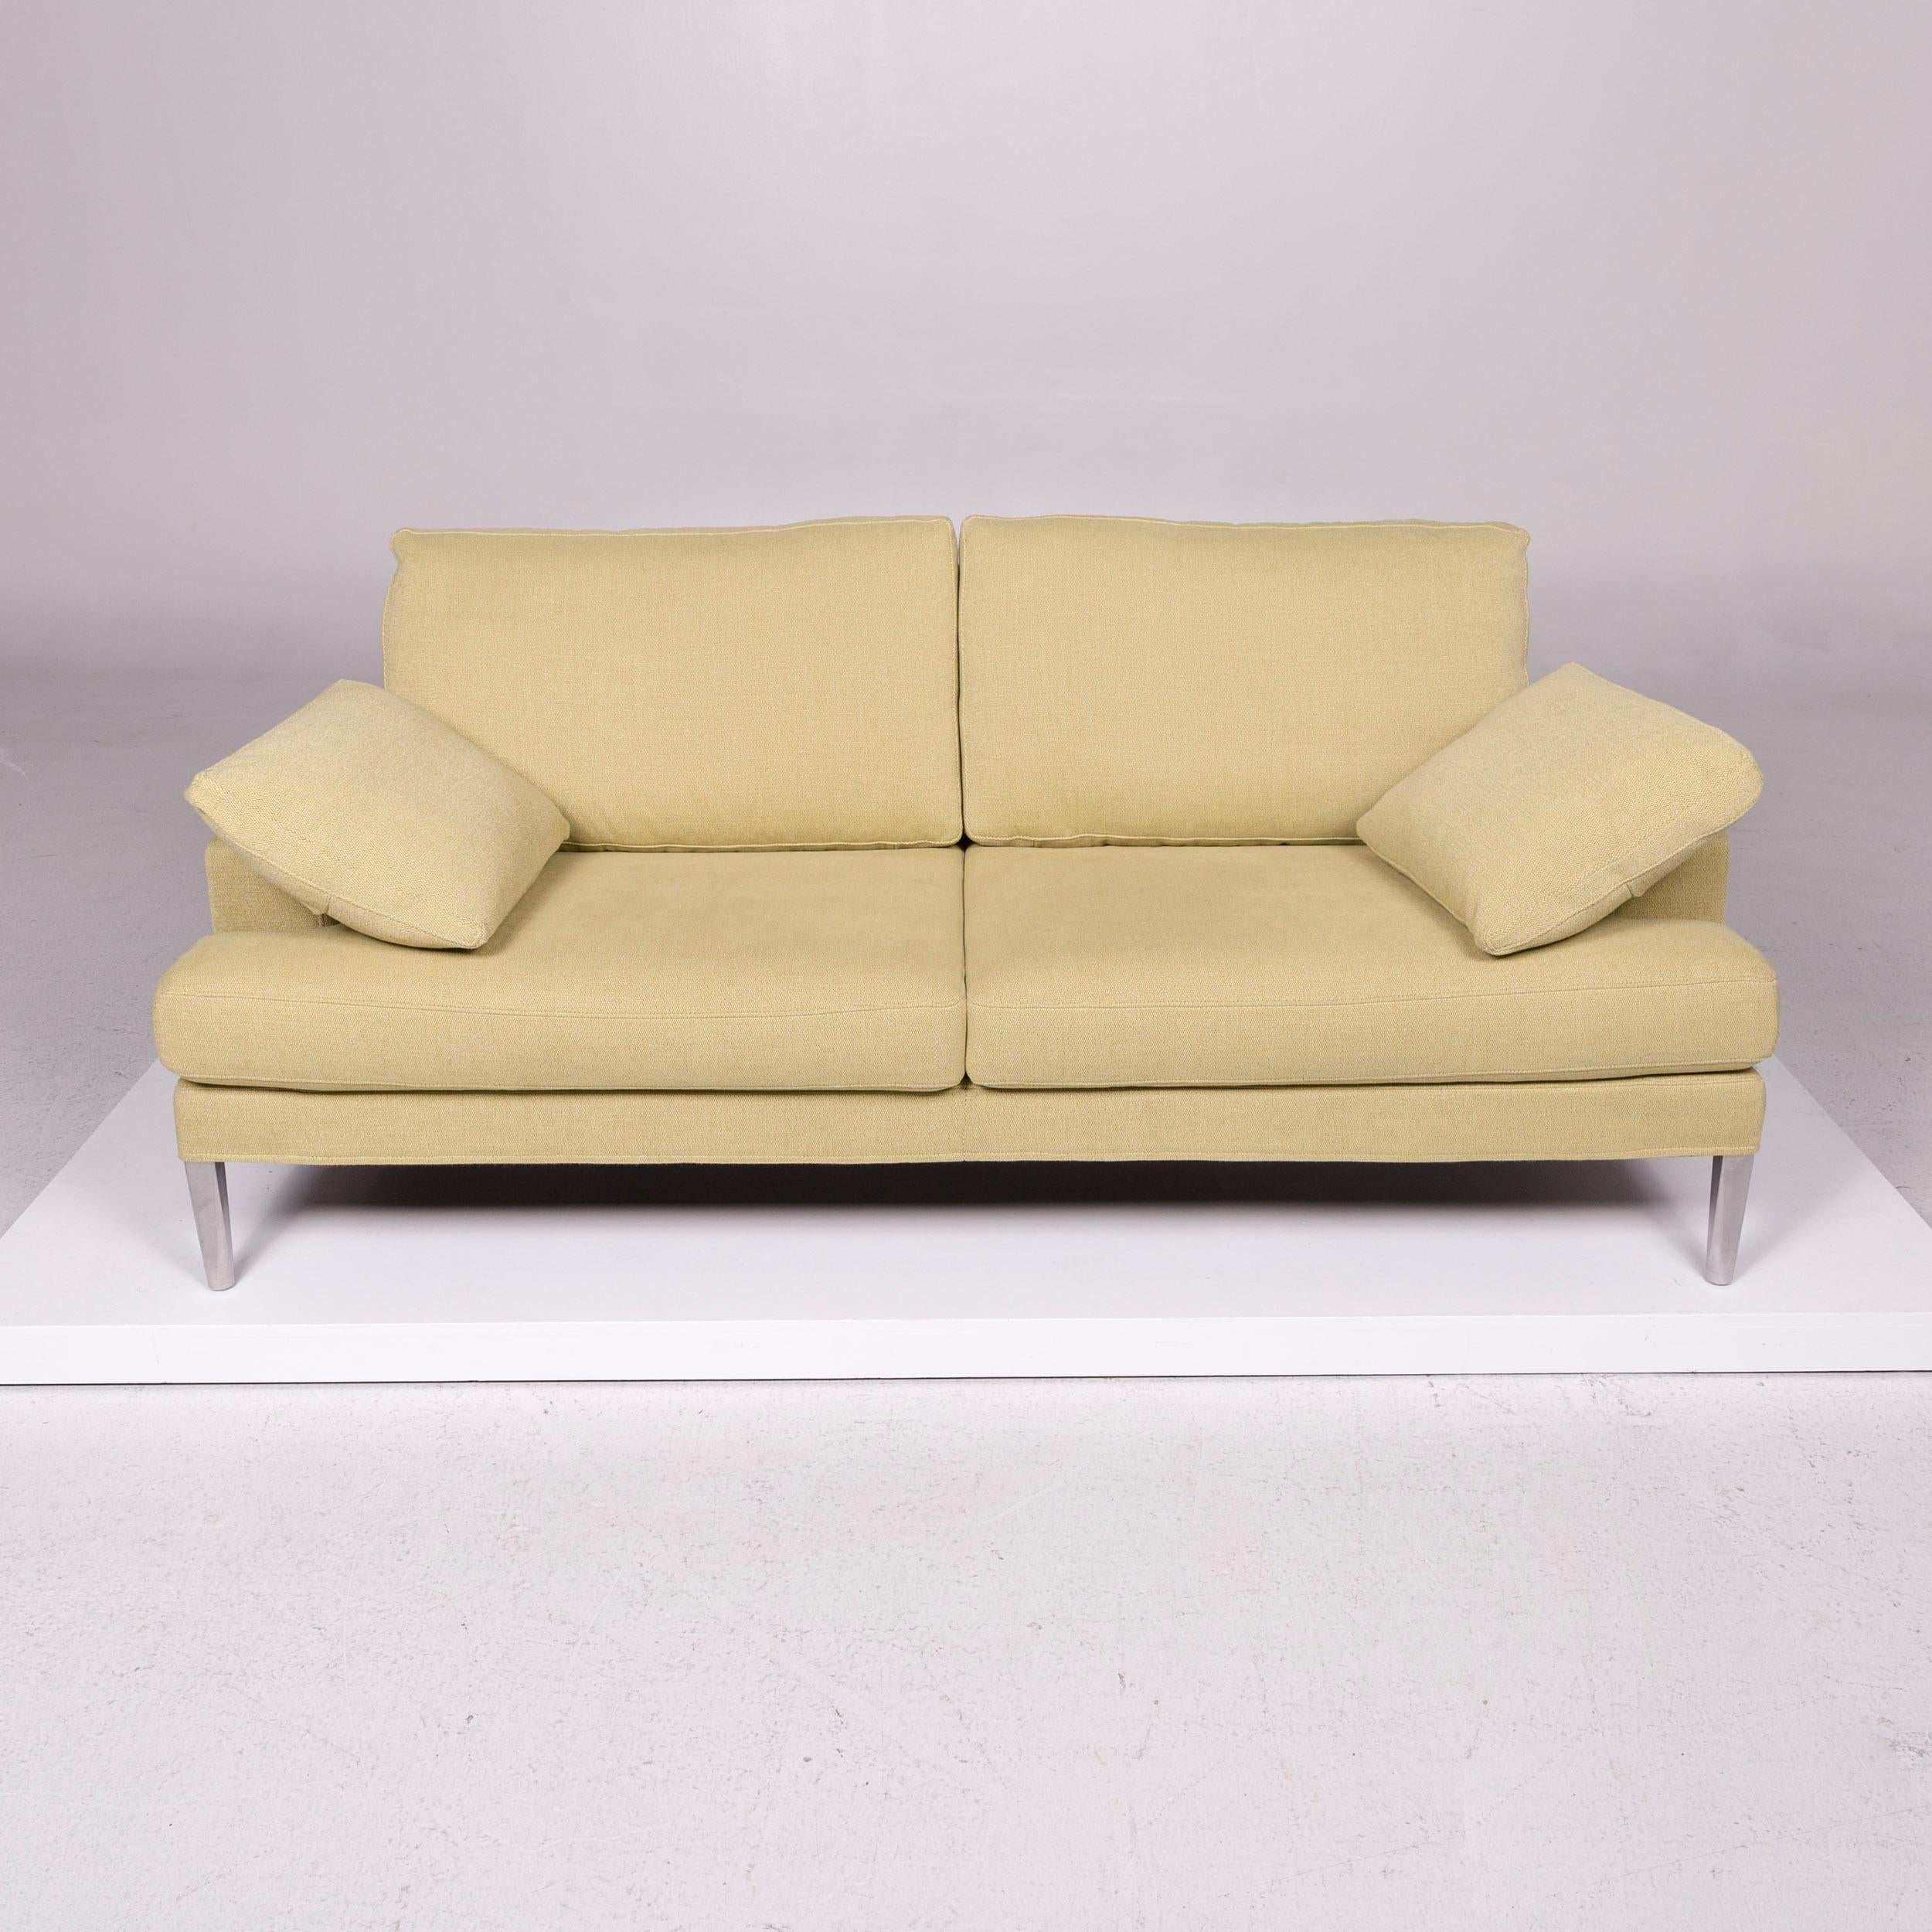 Swiss FSM Clarus Fabric Sofa Yellow Lemon Yellow Two-Seat Couch